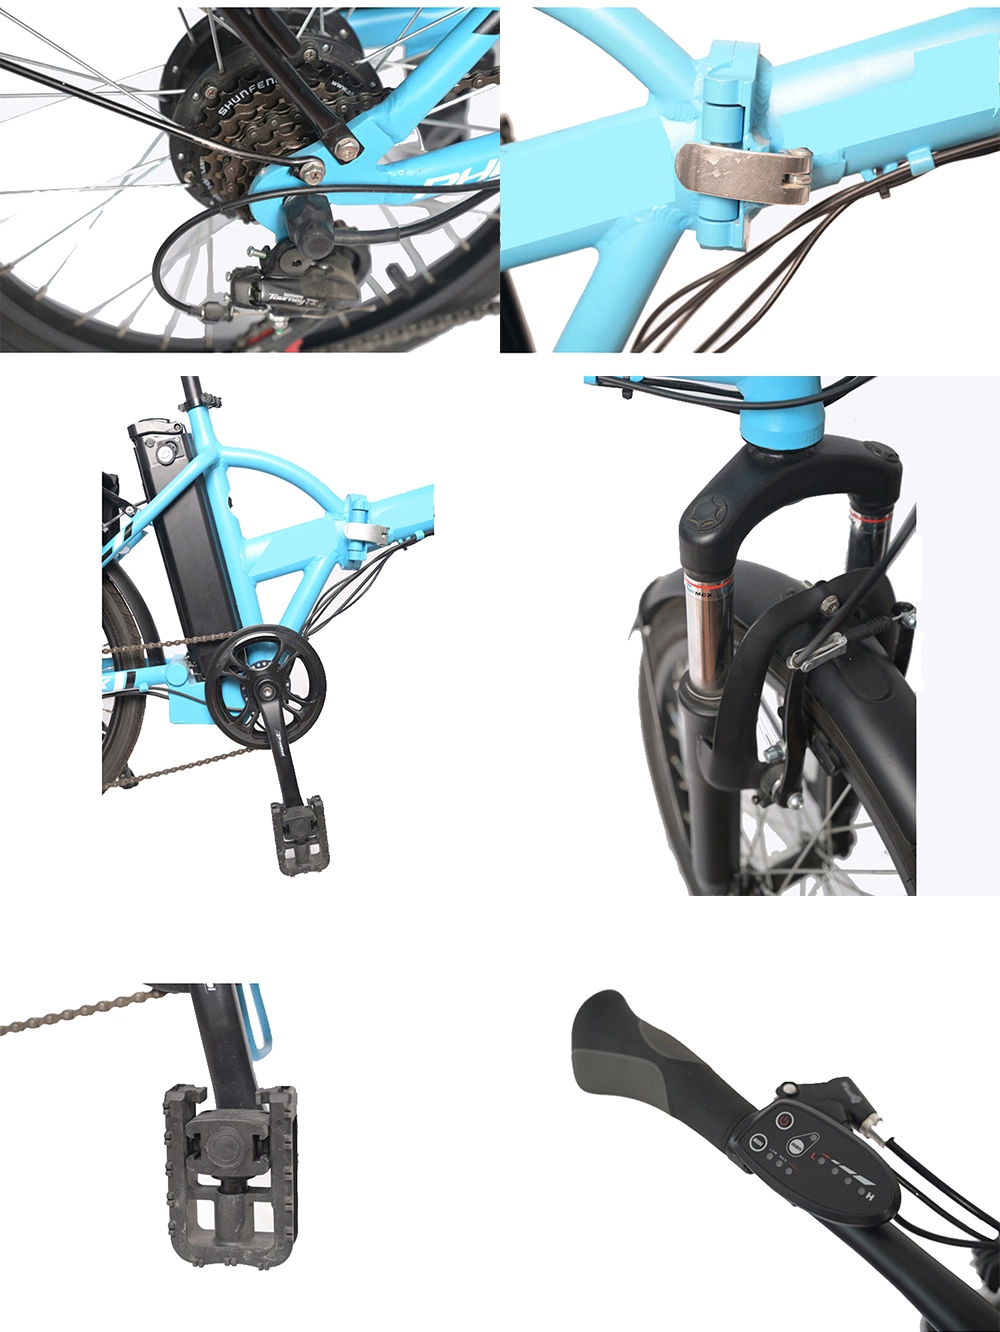 High Quality Womens Sunny Small Foldable E Bike 20 Inch Electric Bike Bicycle 500W